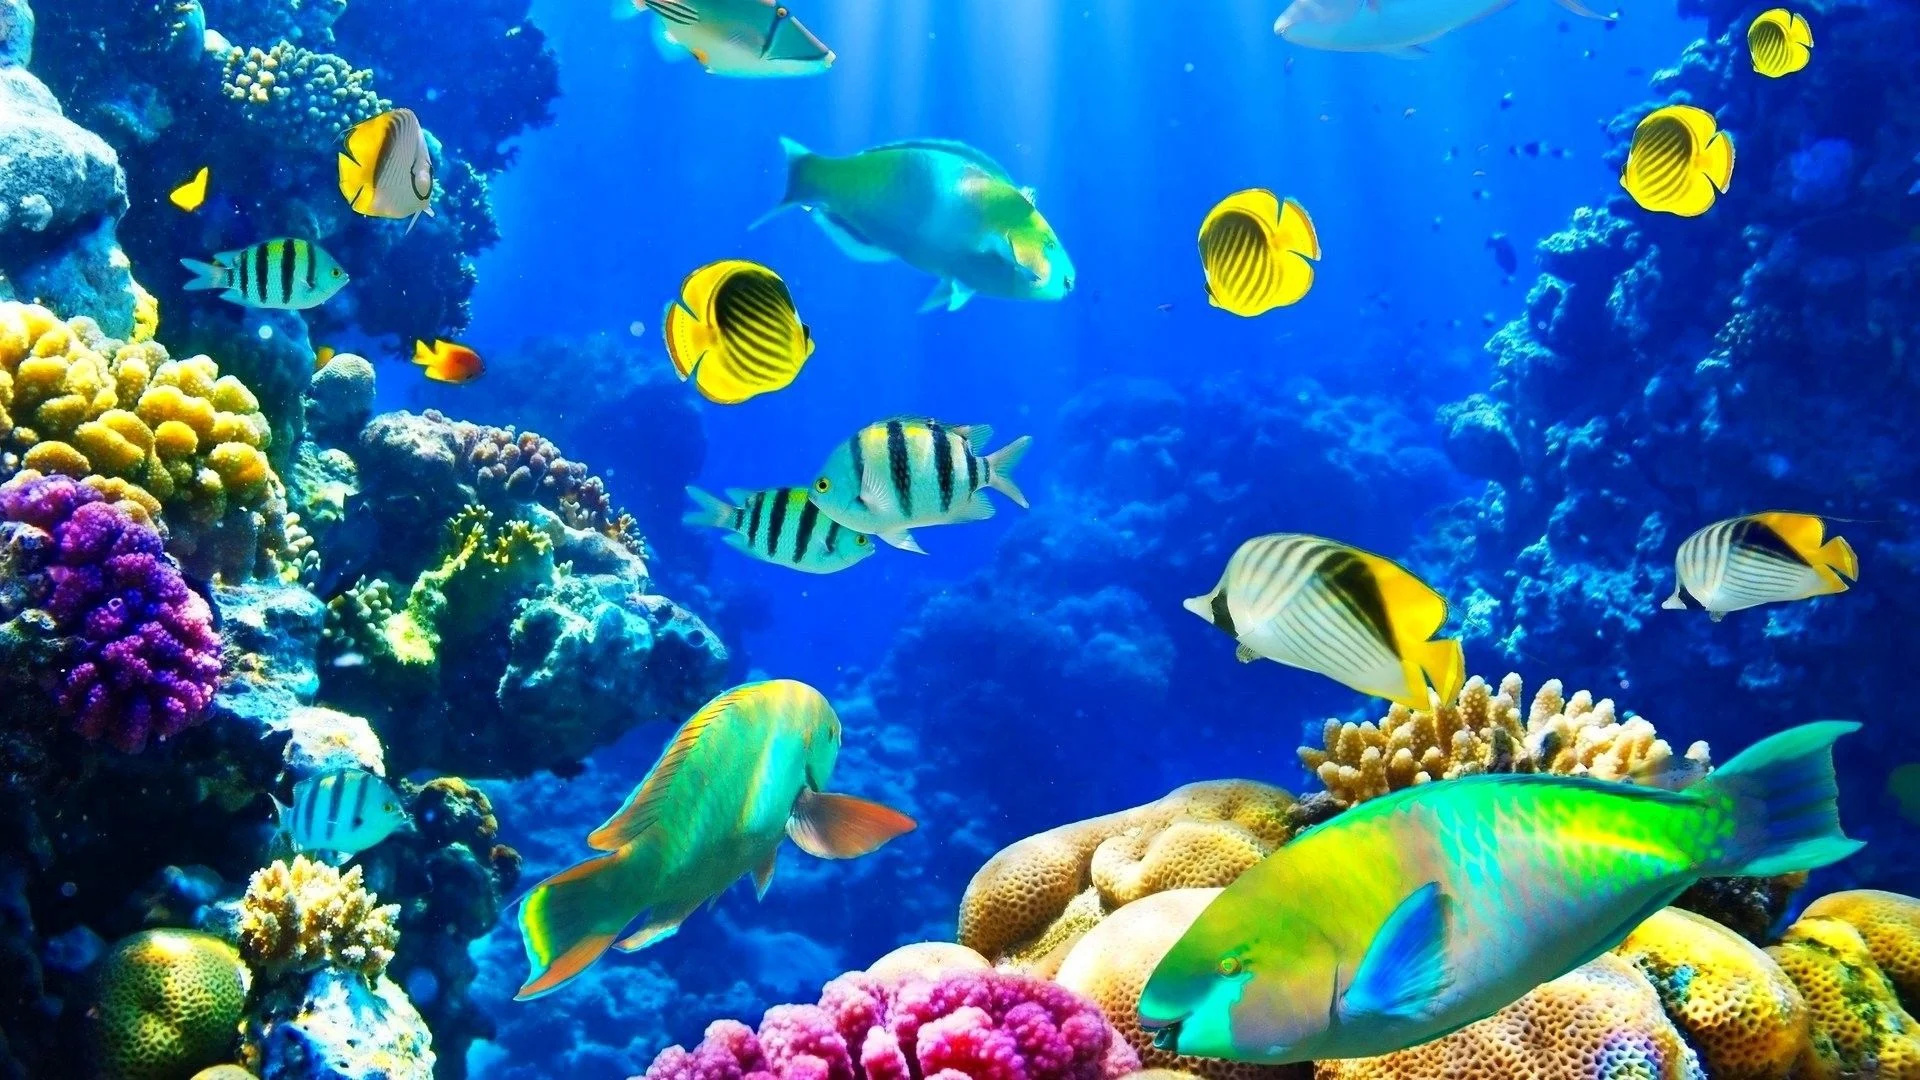 Underwater fish beauty, Captivating wallpapers, Marine life, Aquatic wonder, 1920x1080 Full HD Desktop